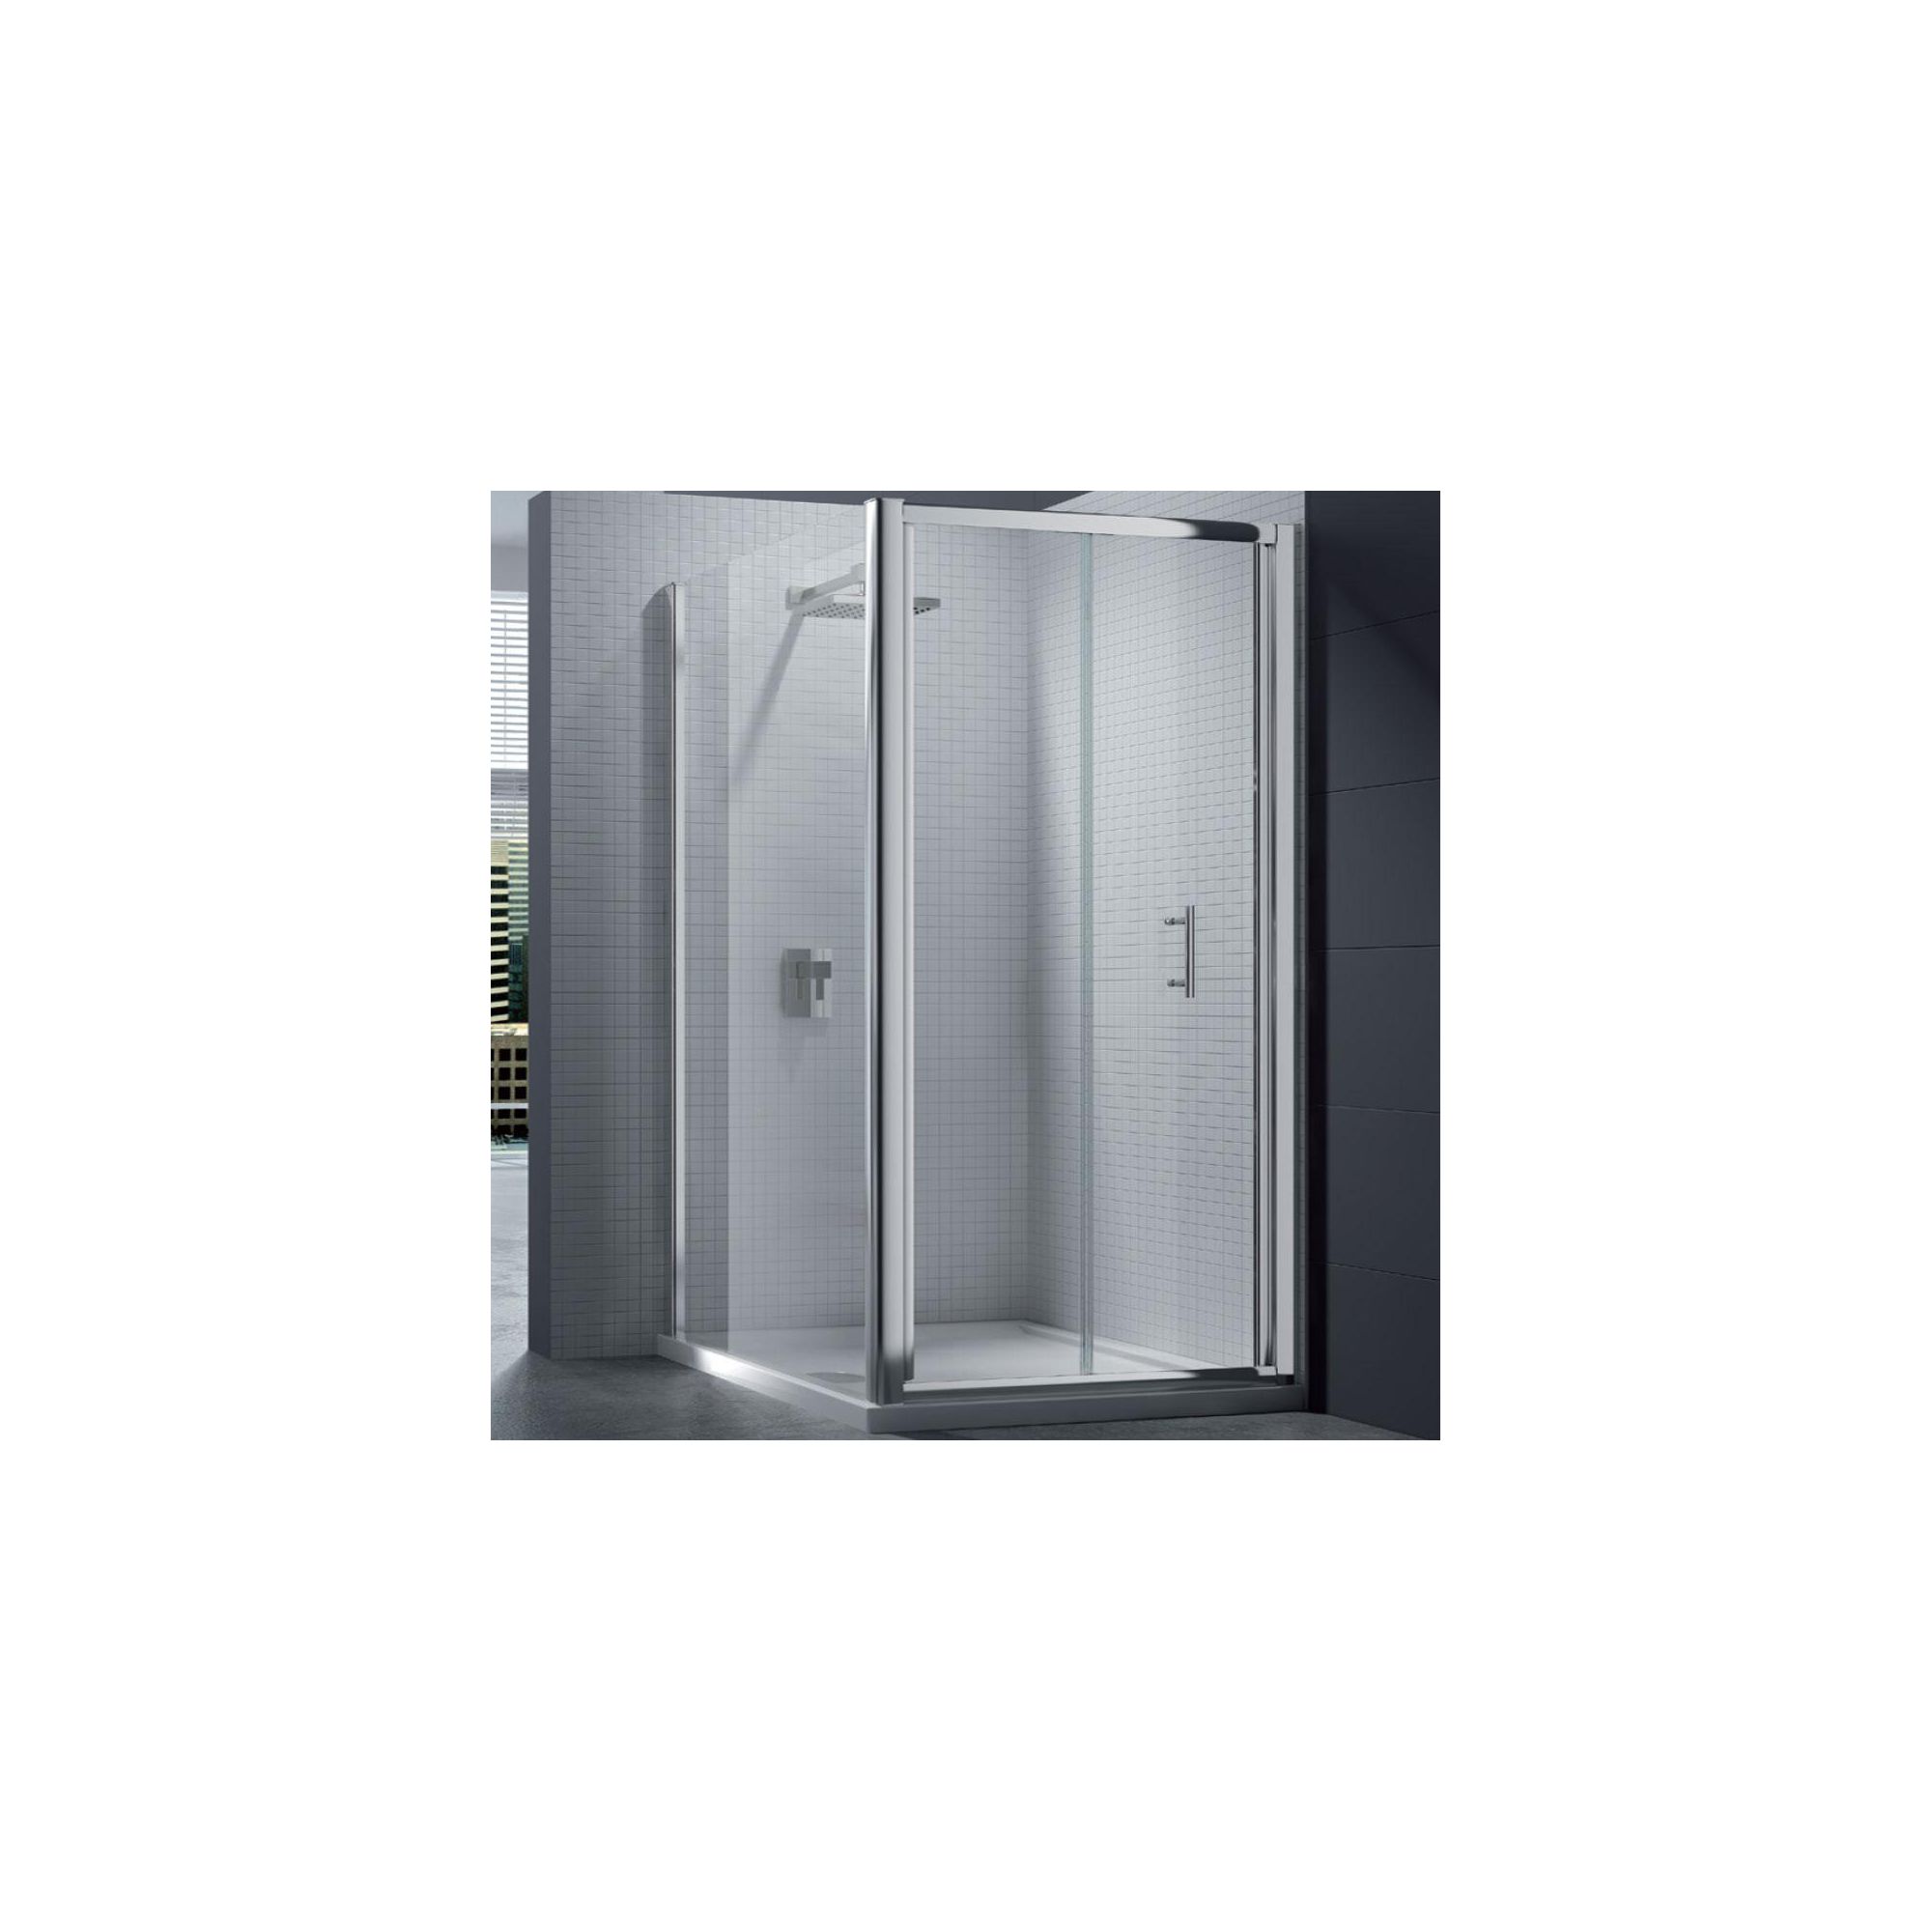 Merlyn Series 6 Bi-Fold Shower Door, 700mm Wide, Chrome Frame, 6mm Glass at Tesco Direct